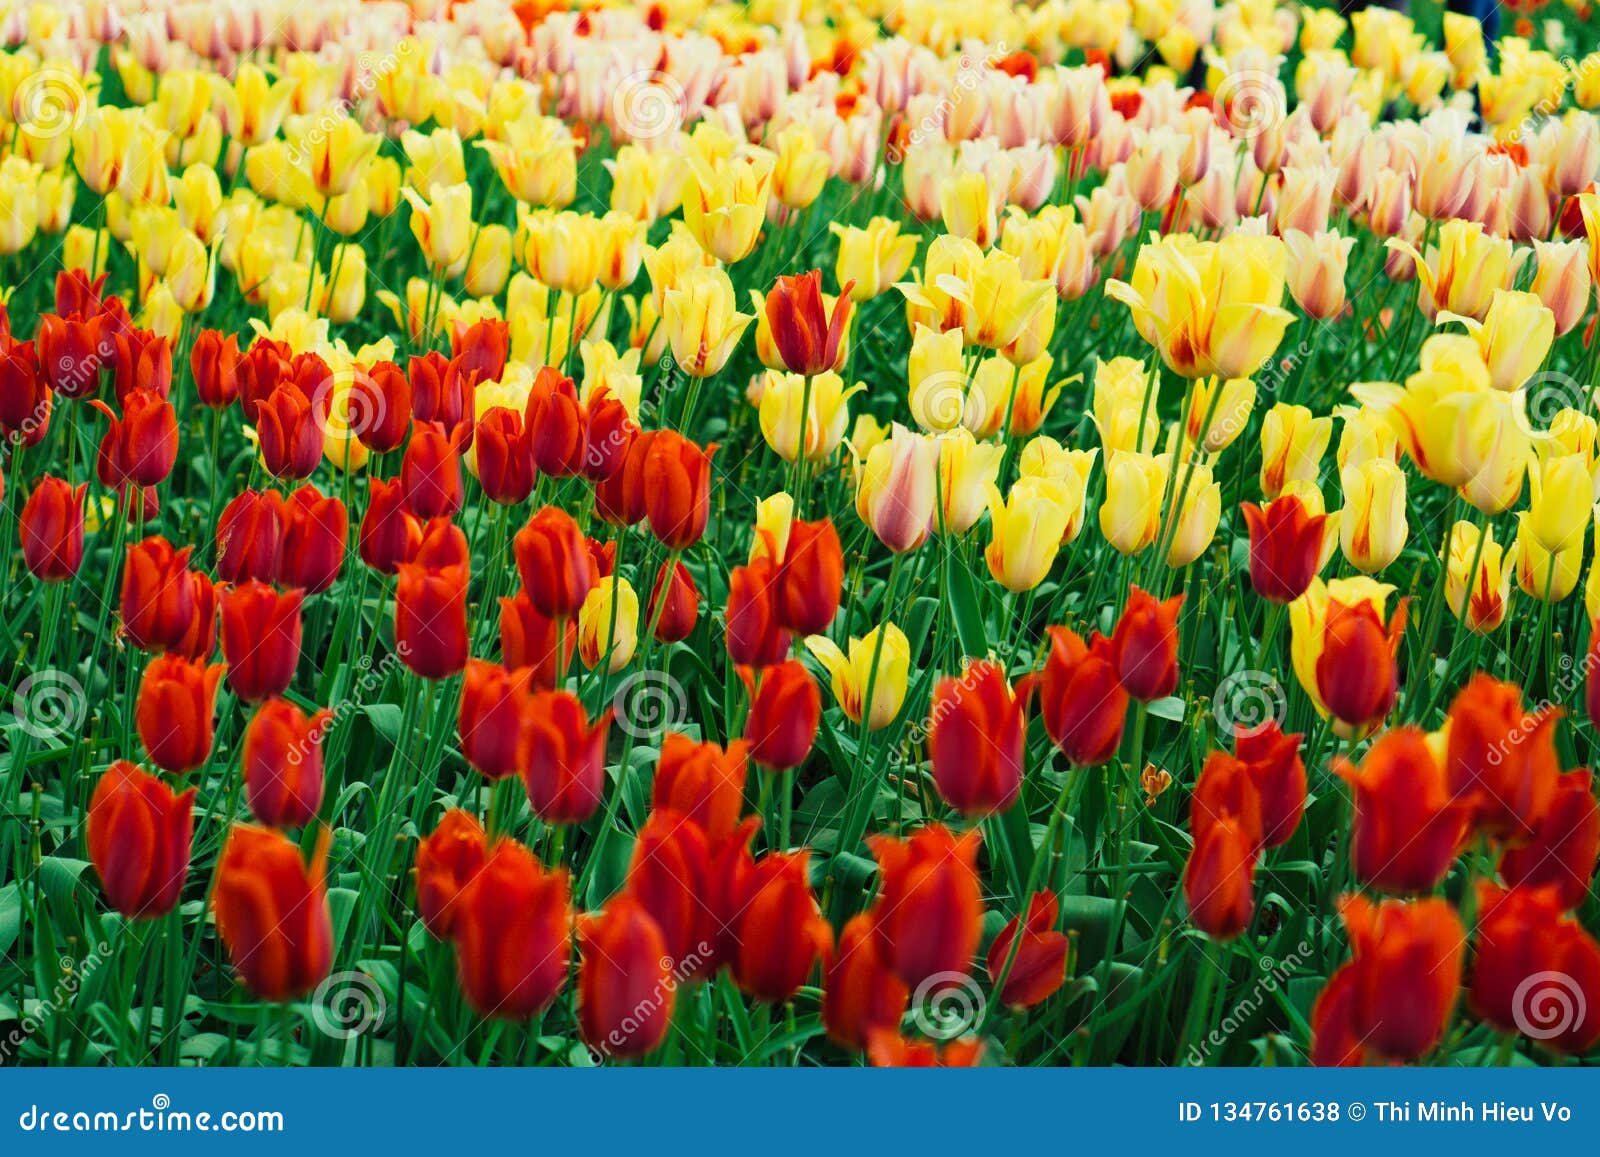 tulip bulbs, keukenhof garden, holland stock photo - image of bright